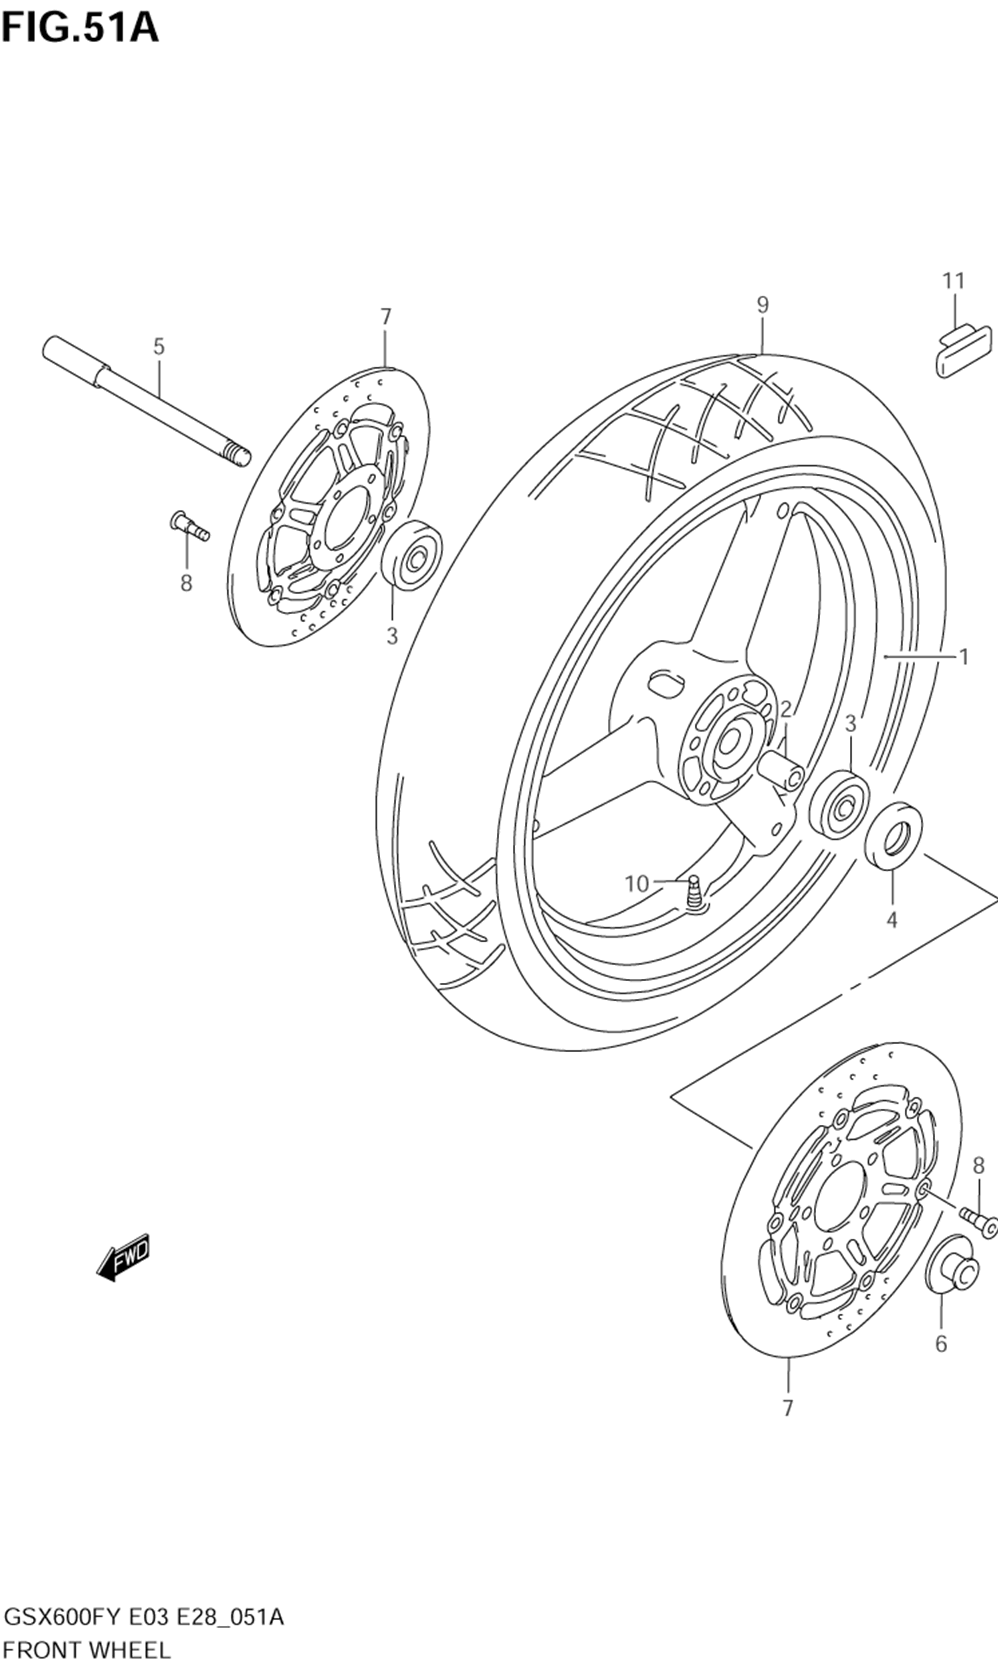 Front wheel (model k3)